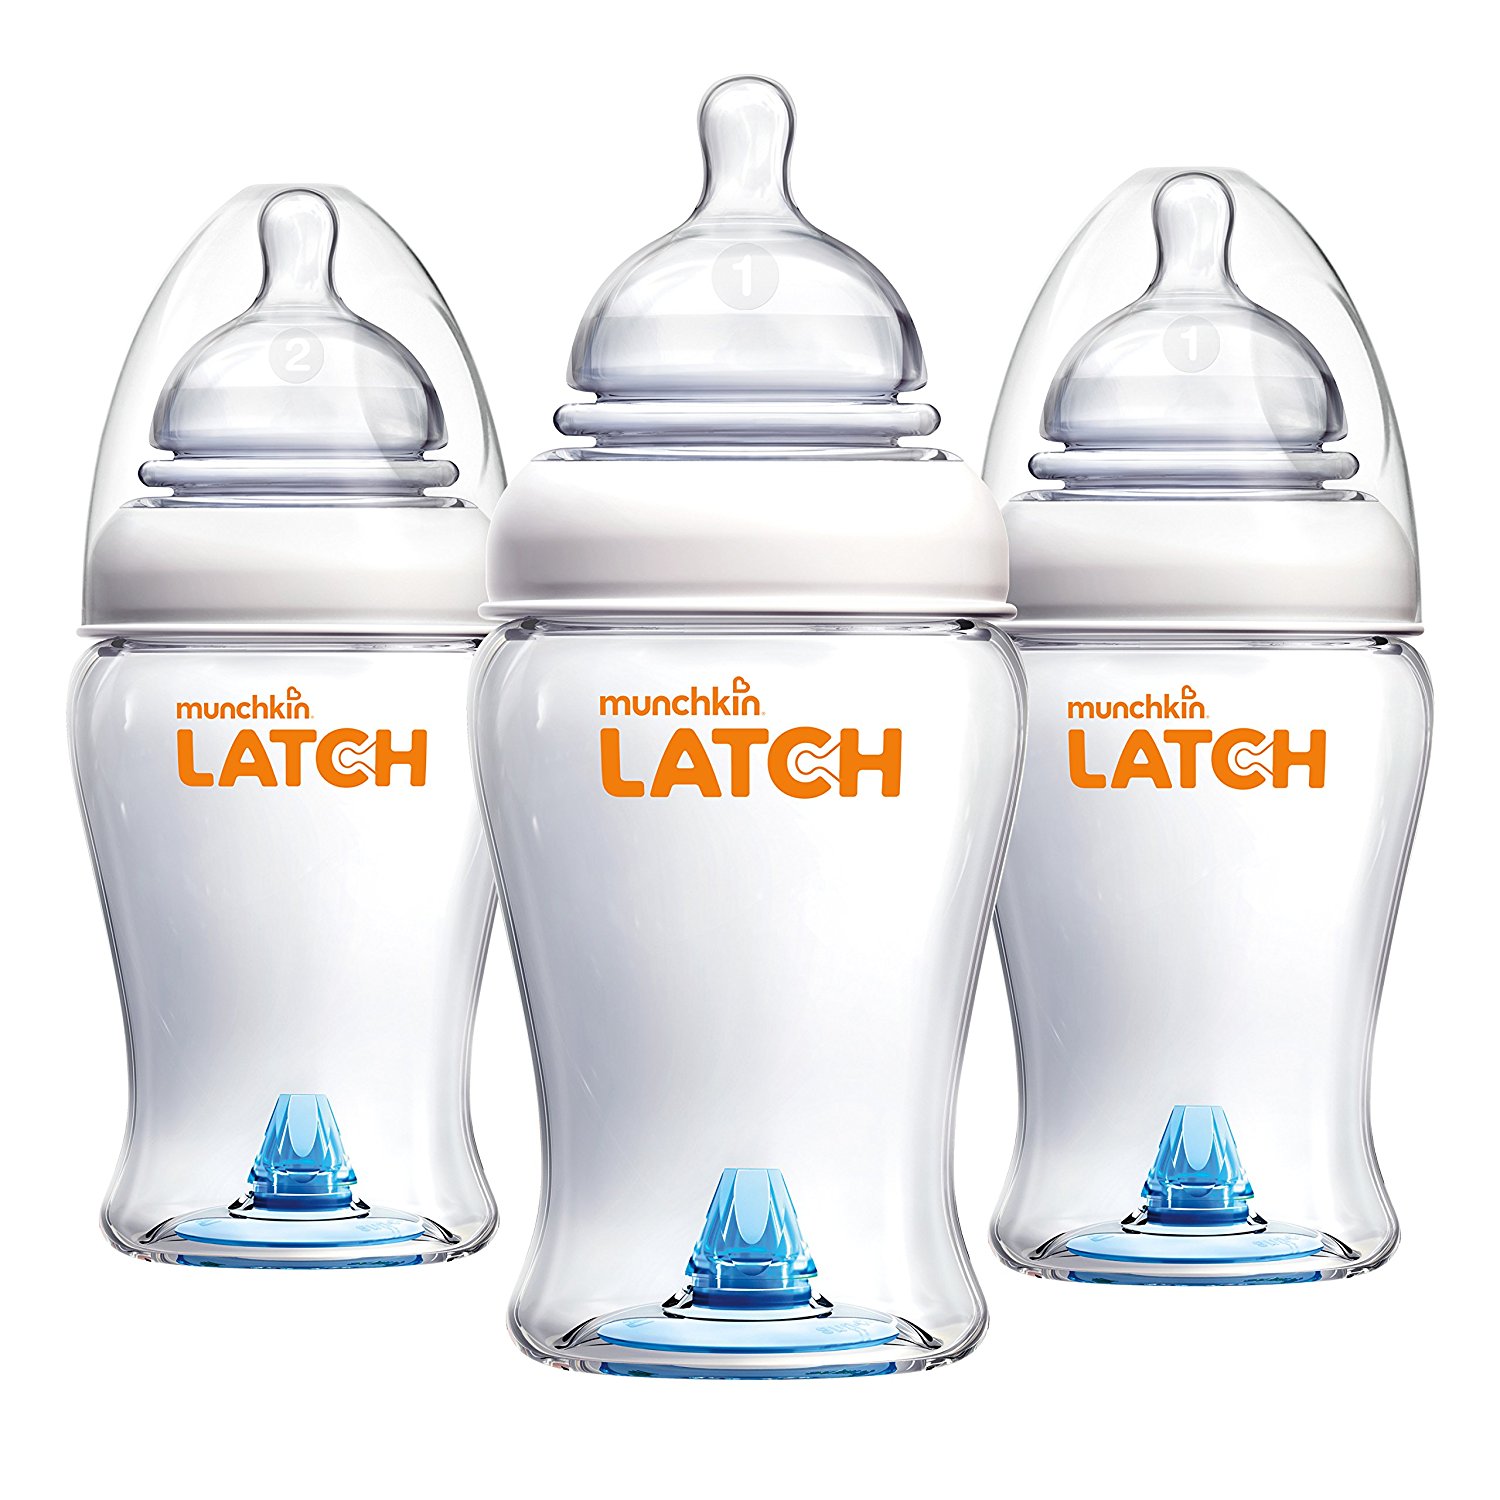 munchkin latch bpa-free baby bottles, best baby bottles, plastic baby bottles, baby bottles